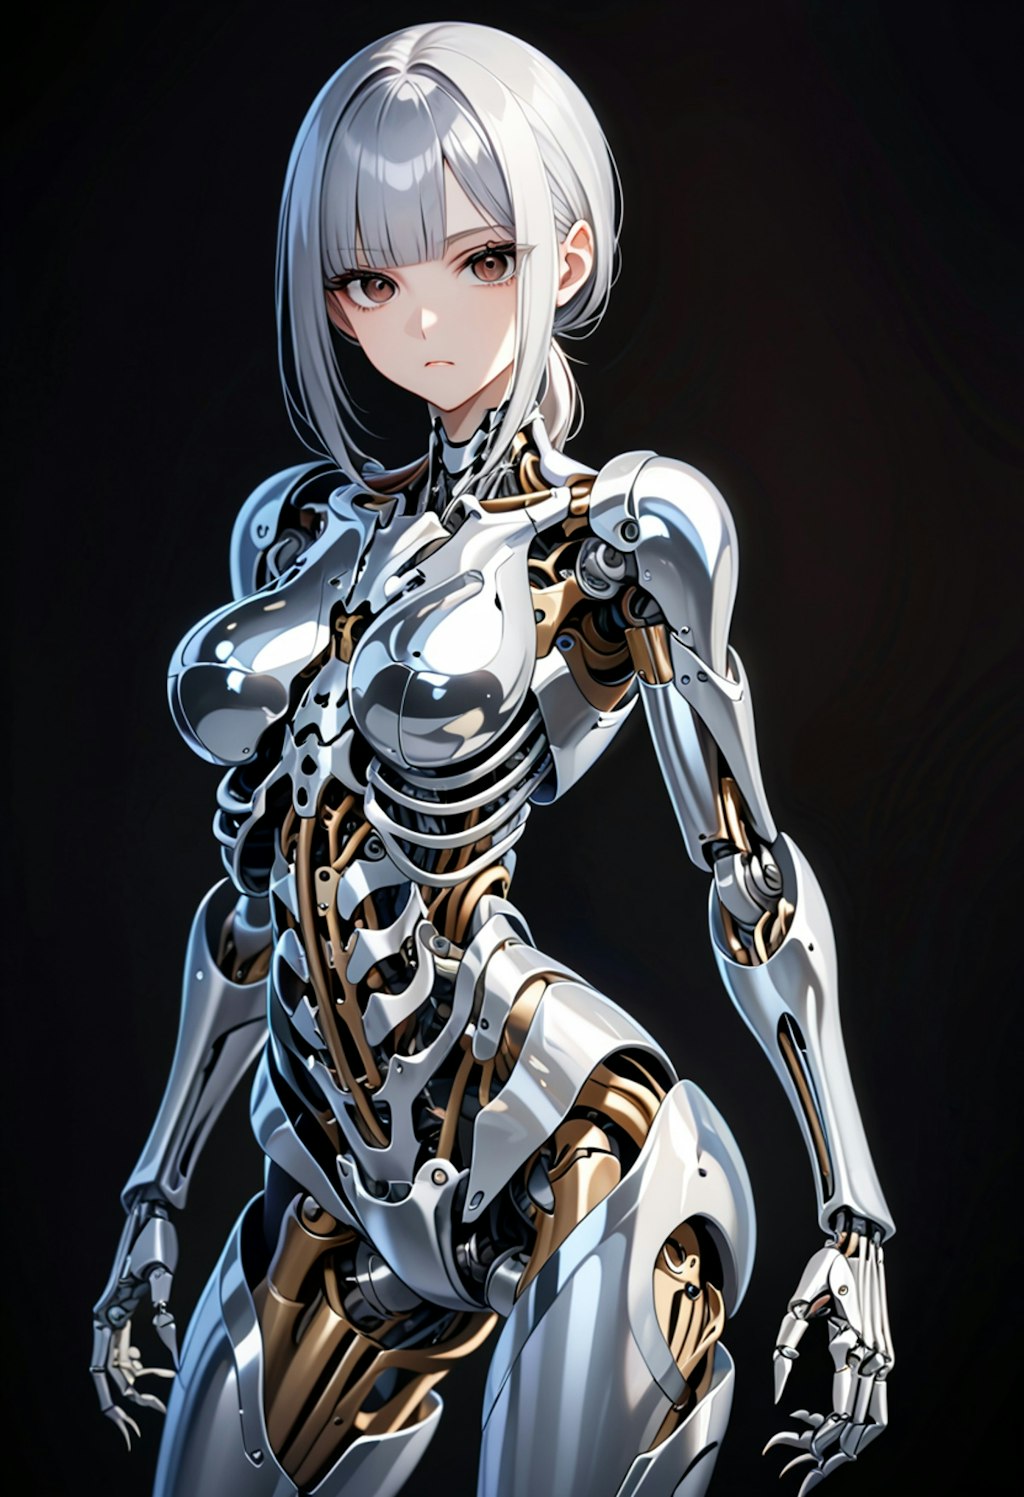 skeletonizedメカ子